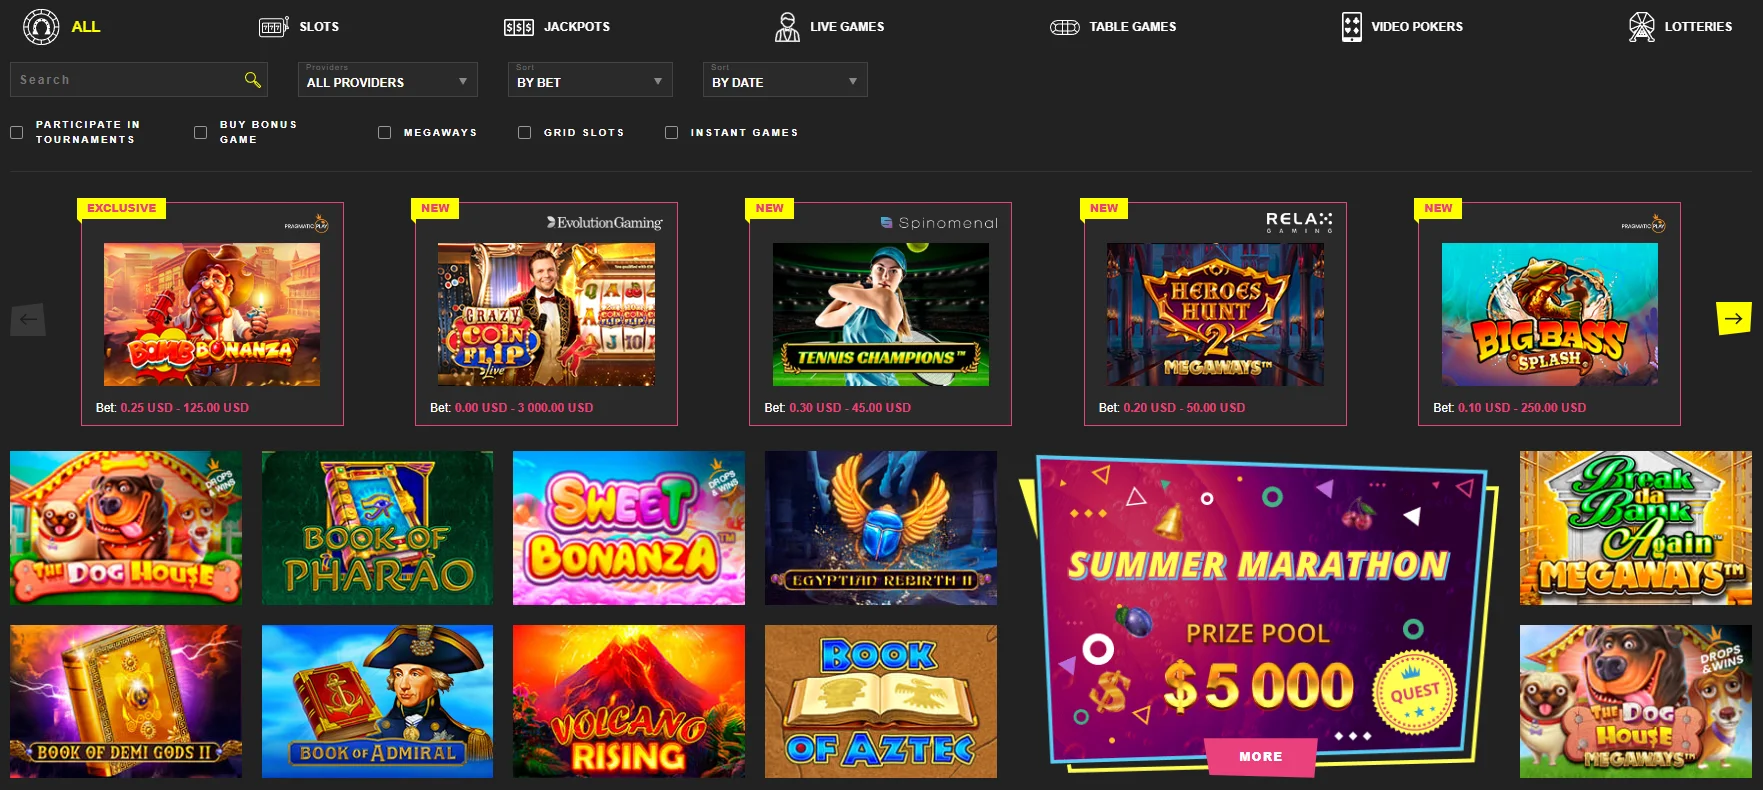 Games in The Online Casino Booi | World Casino Expert